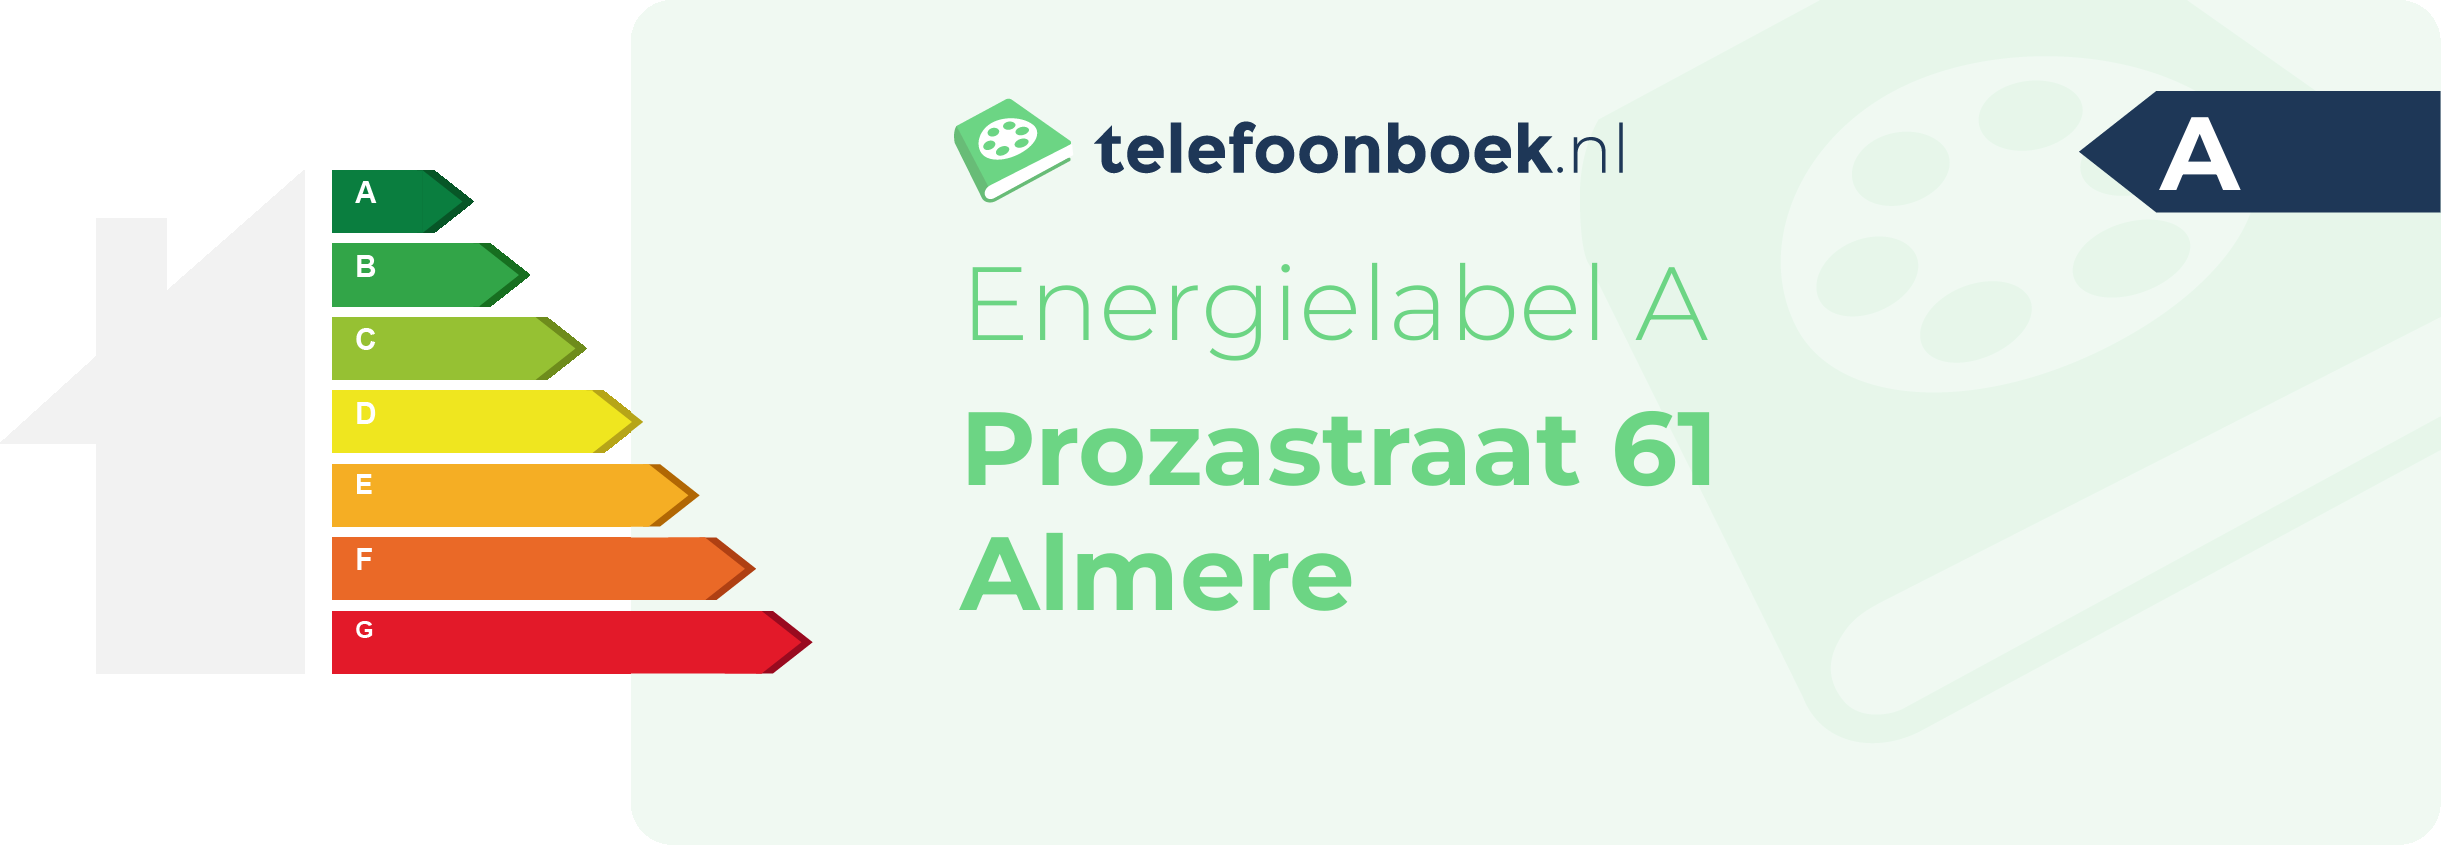 Energielabel Prozastraat 61 Almere